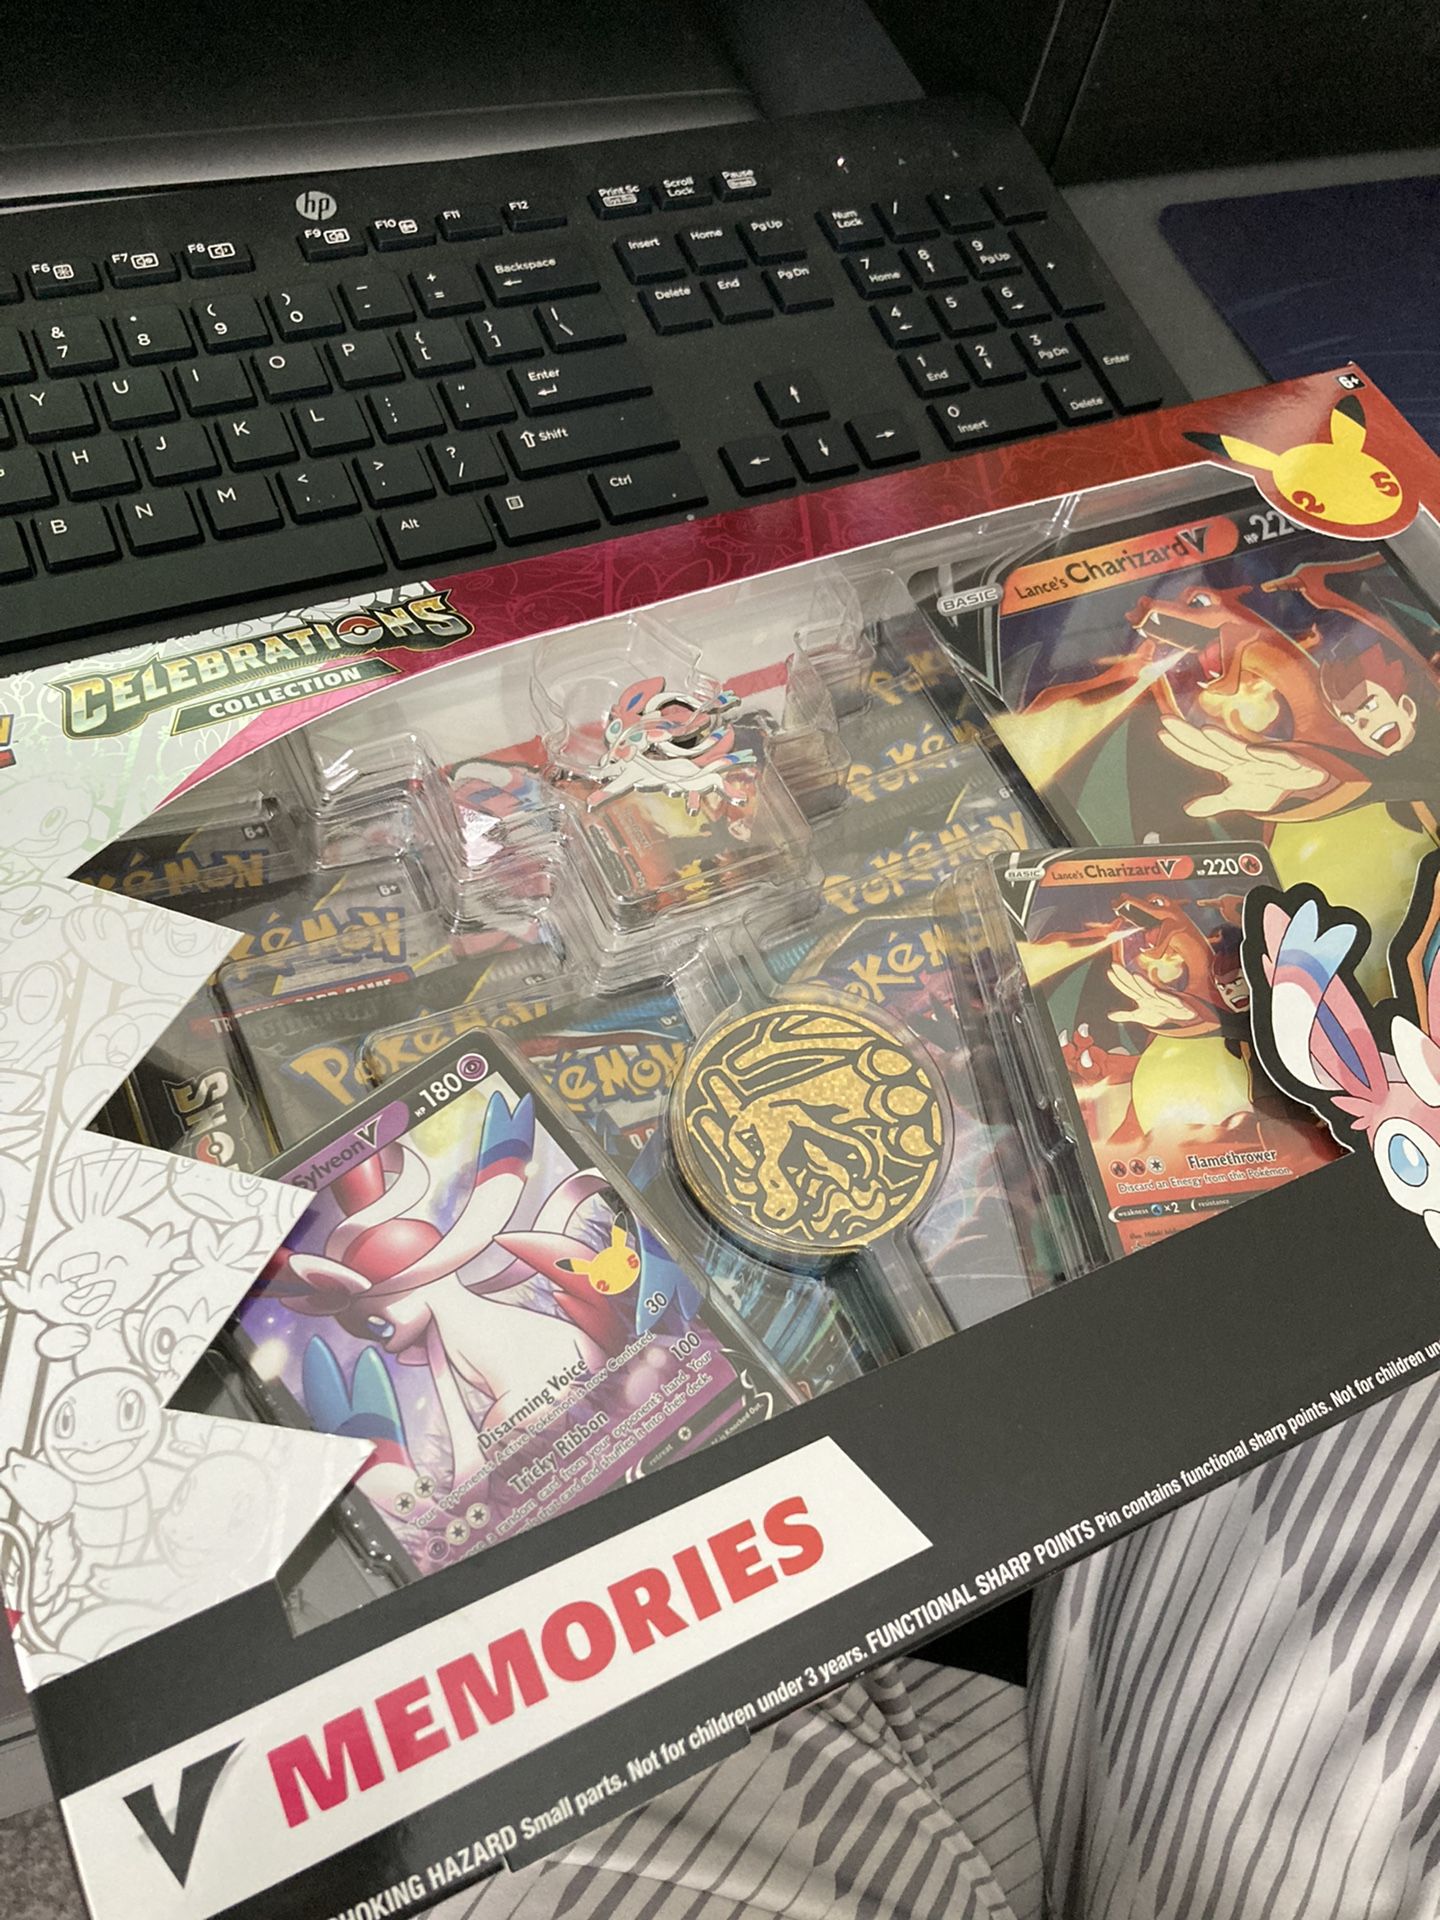 Pokémon Celebrations V Memories Special Collection Box